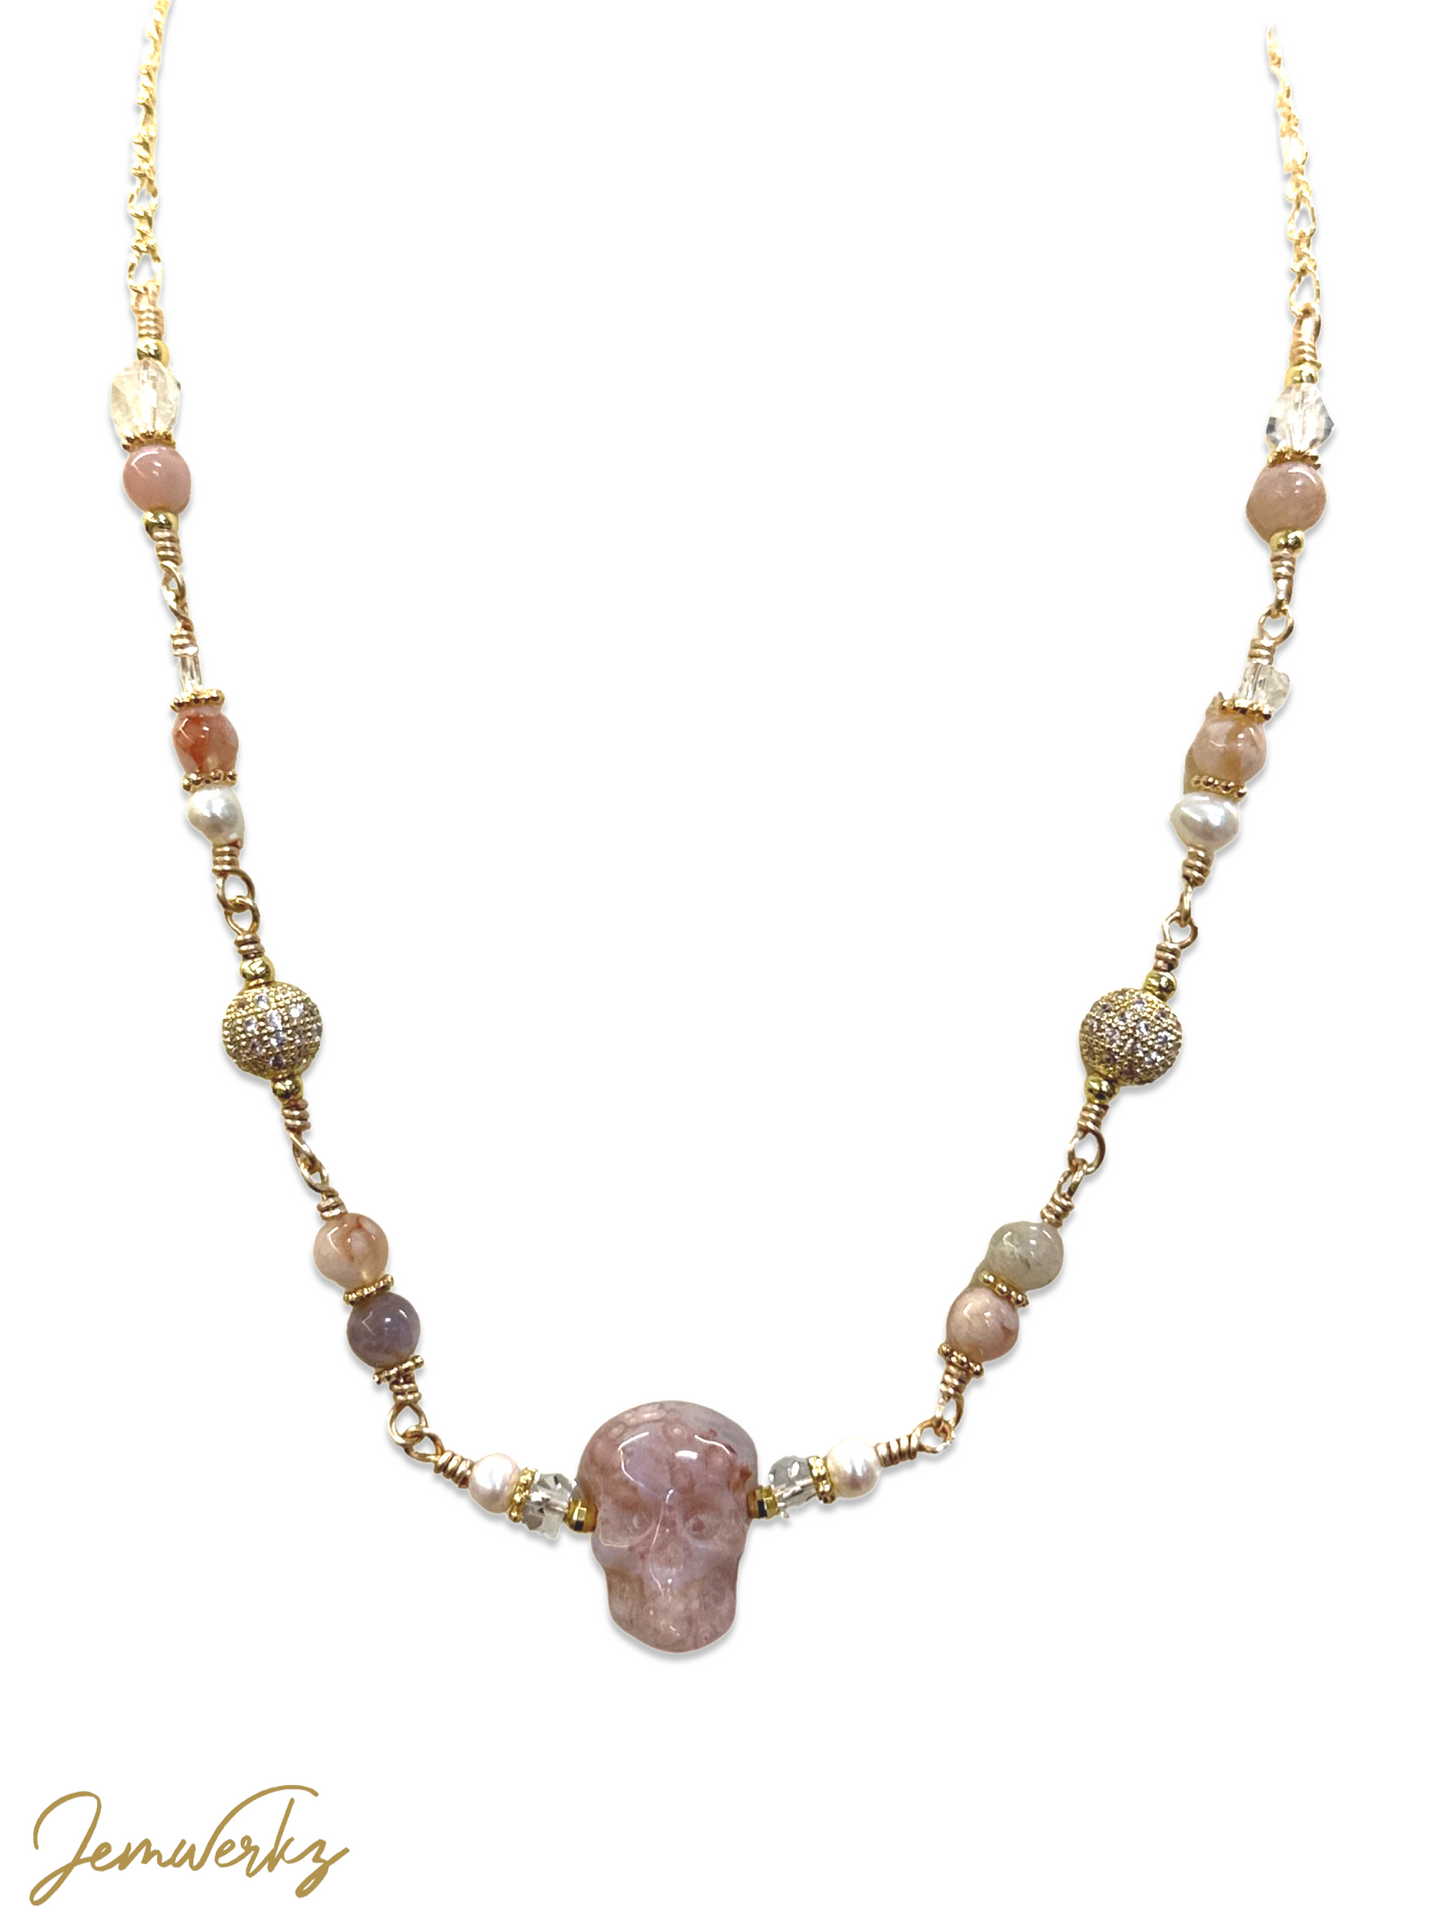 SHIORI - Sakura Agate Skull Necklace with Sakura Agate, Freshwater Pearls and Clear Quartz